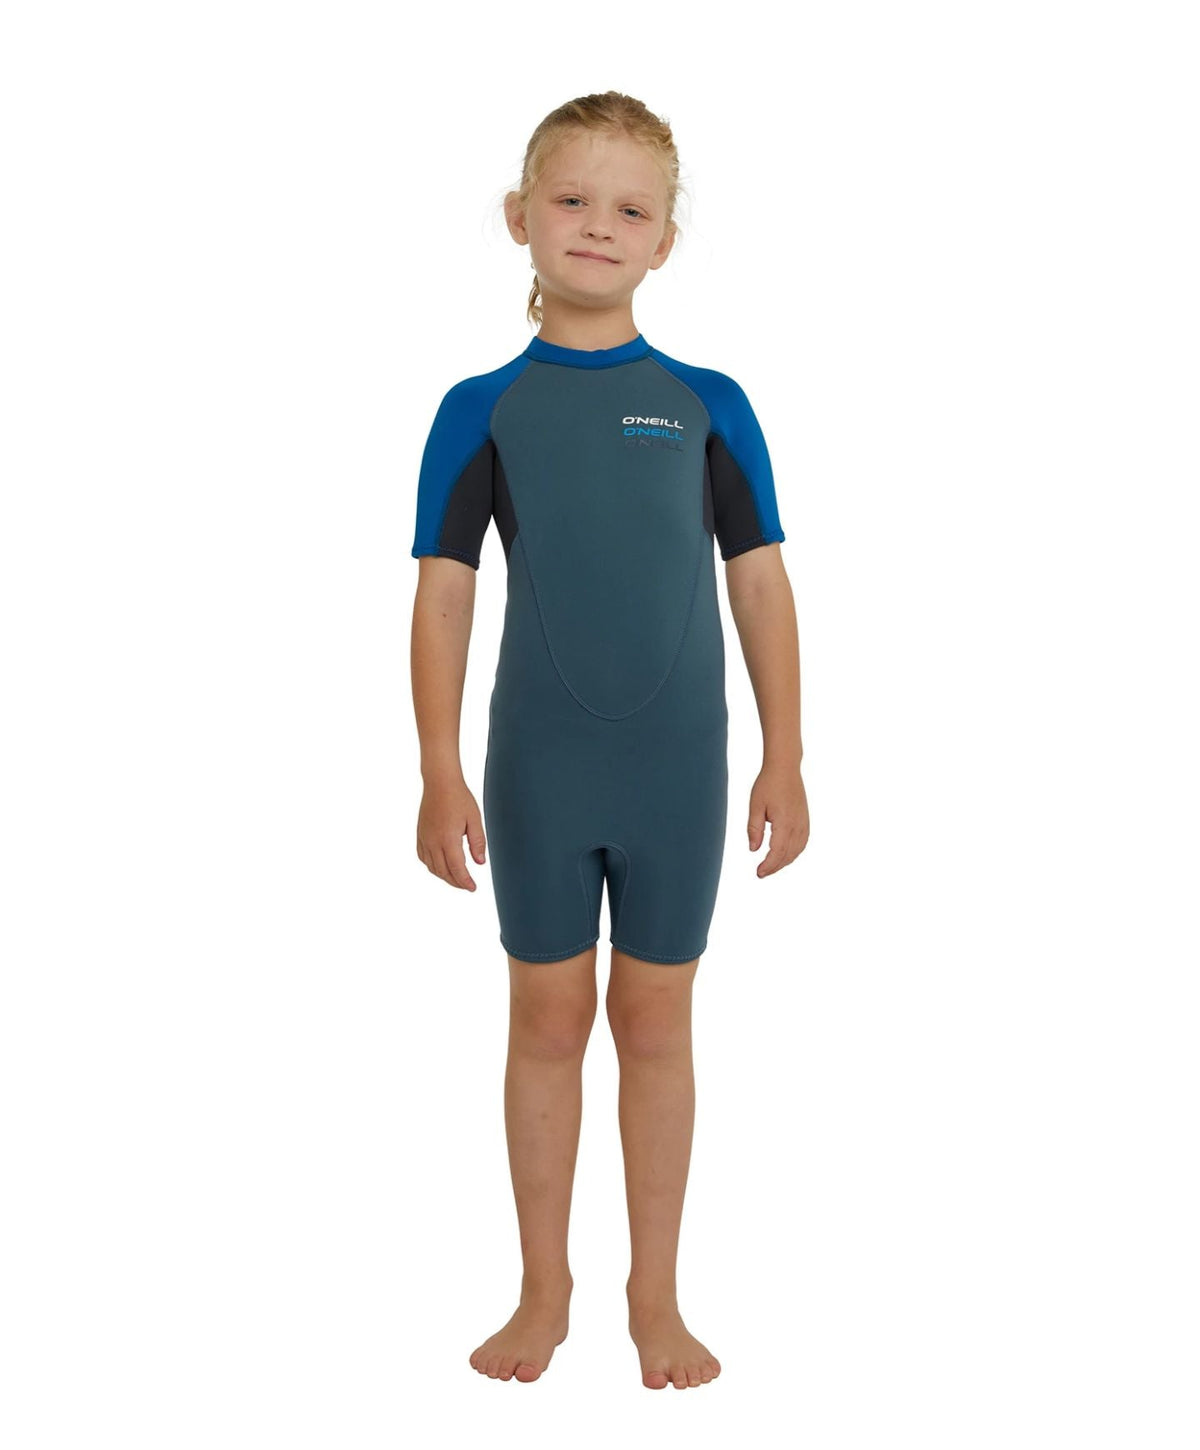 Toddler's Reactor Spring Suit 2mm Wetsuit - Cadet